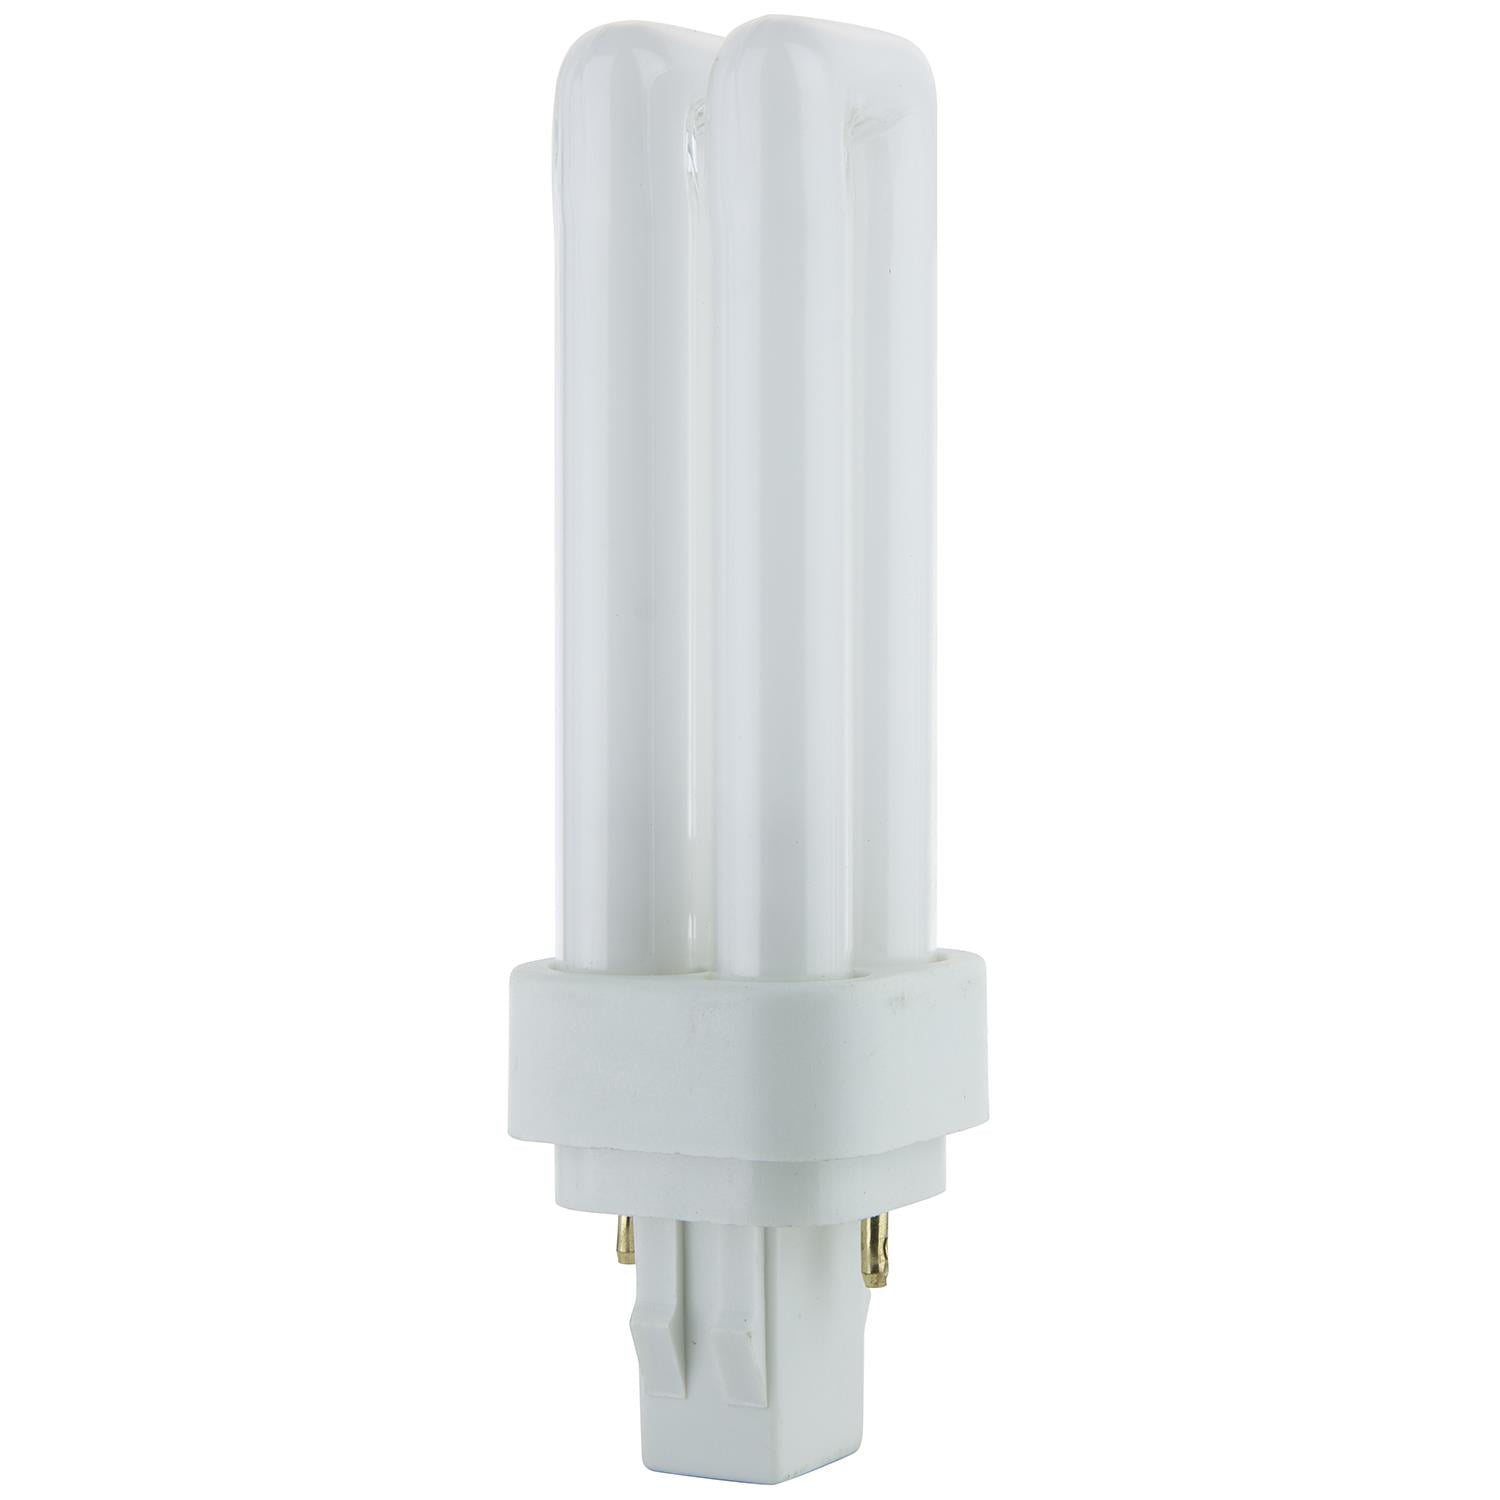 Pack of 10 PLD 13W GX23-2 835 2 Pin Compact Fluorescent Light Bulb 13 Watt Double U Shaped Tube 